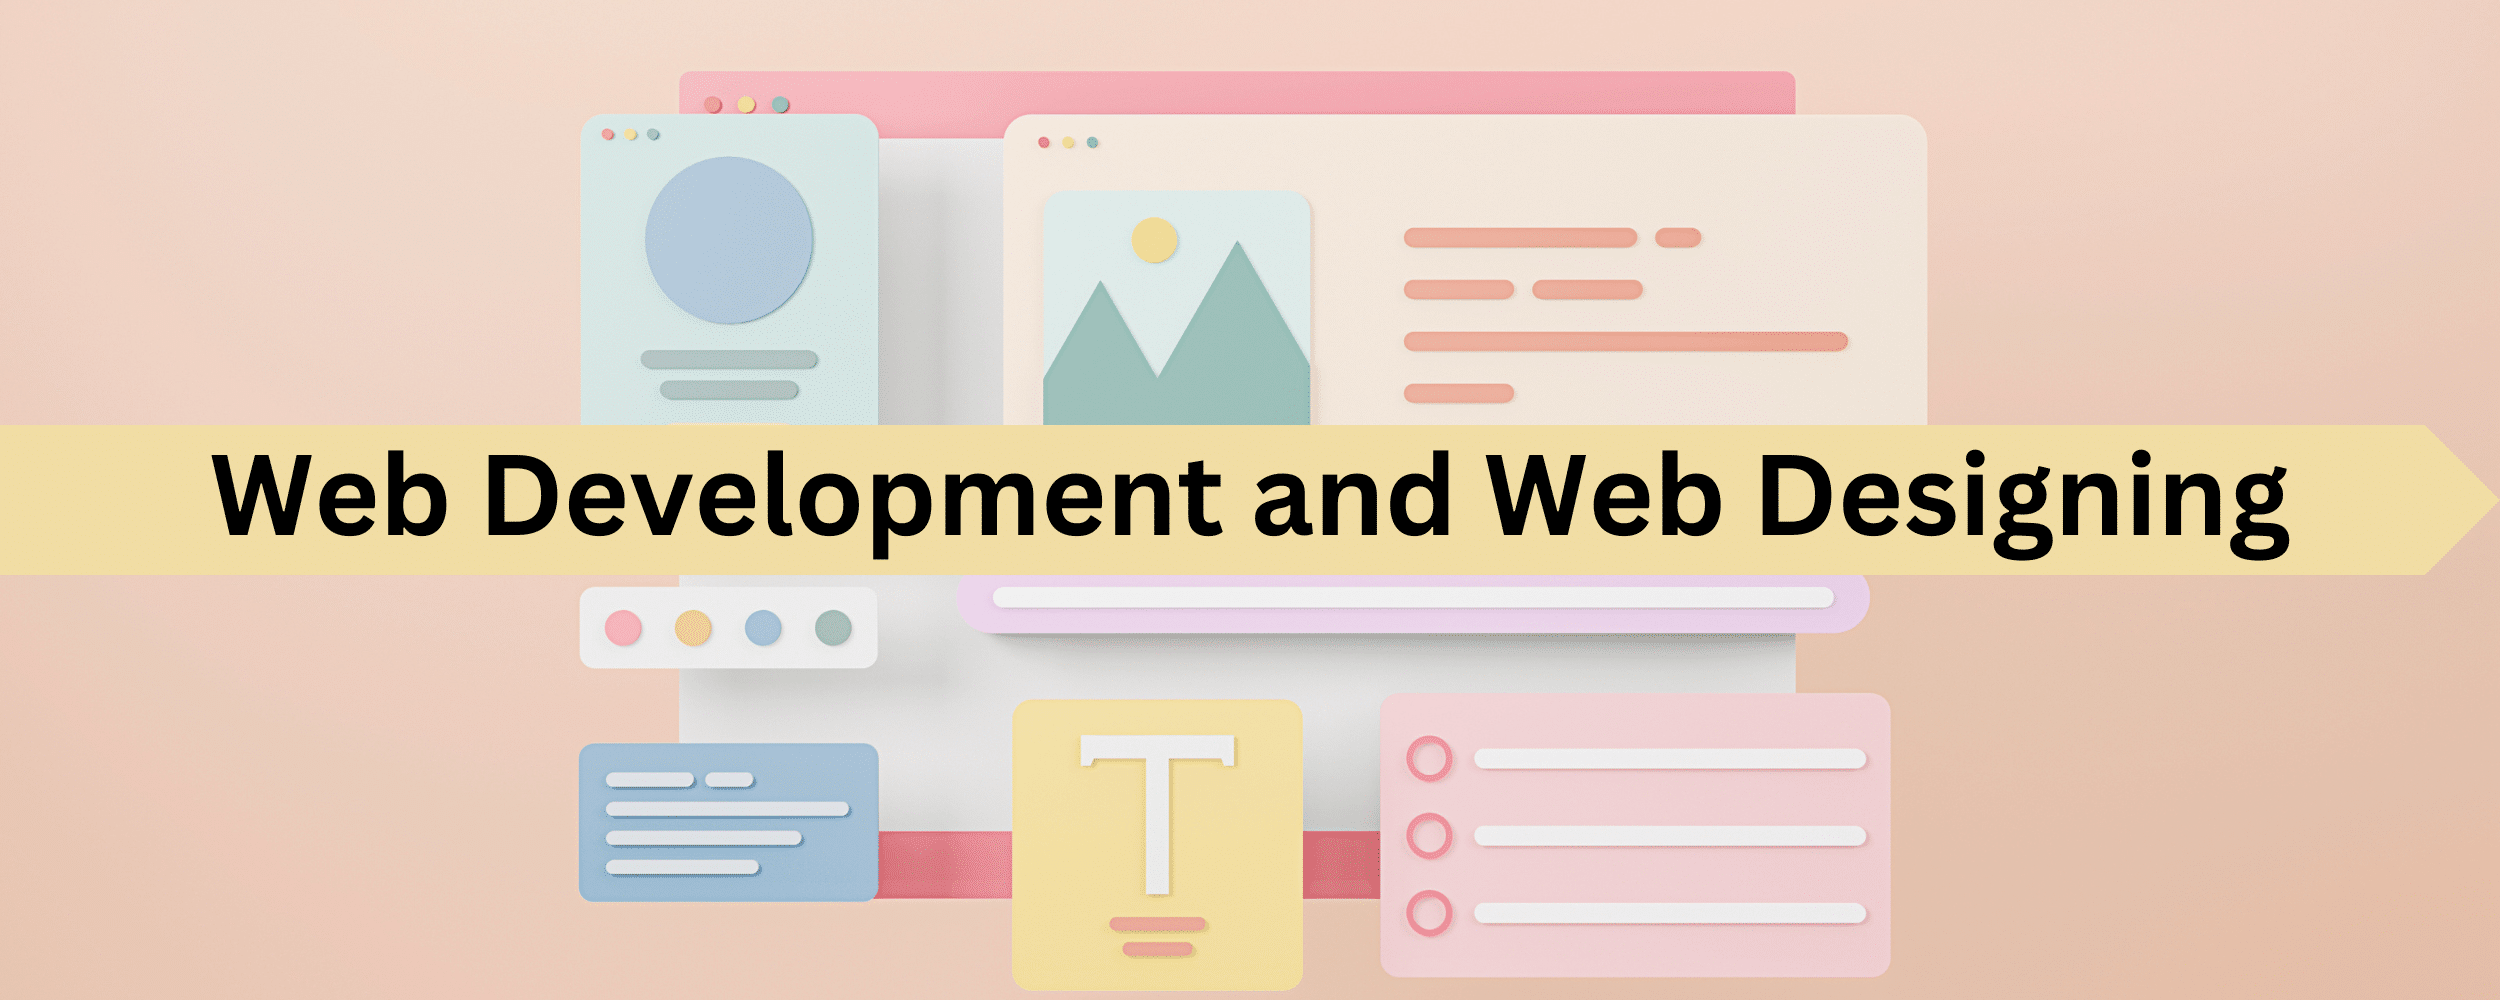 Web Development and Web Designing